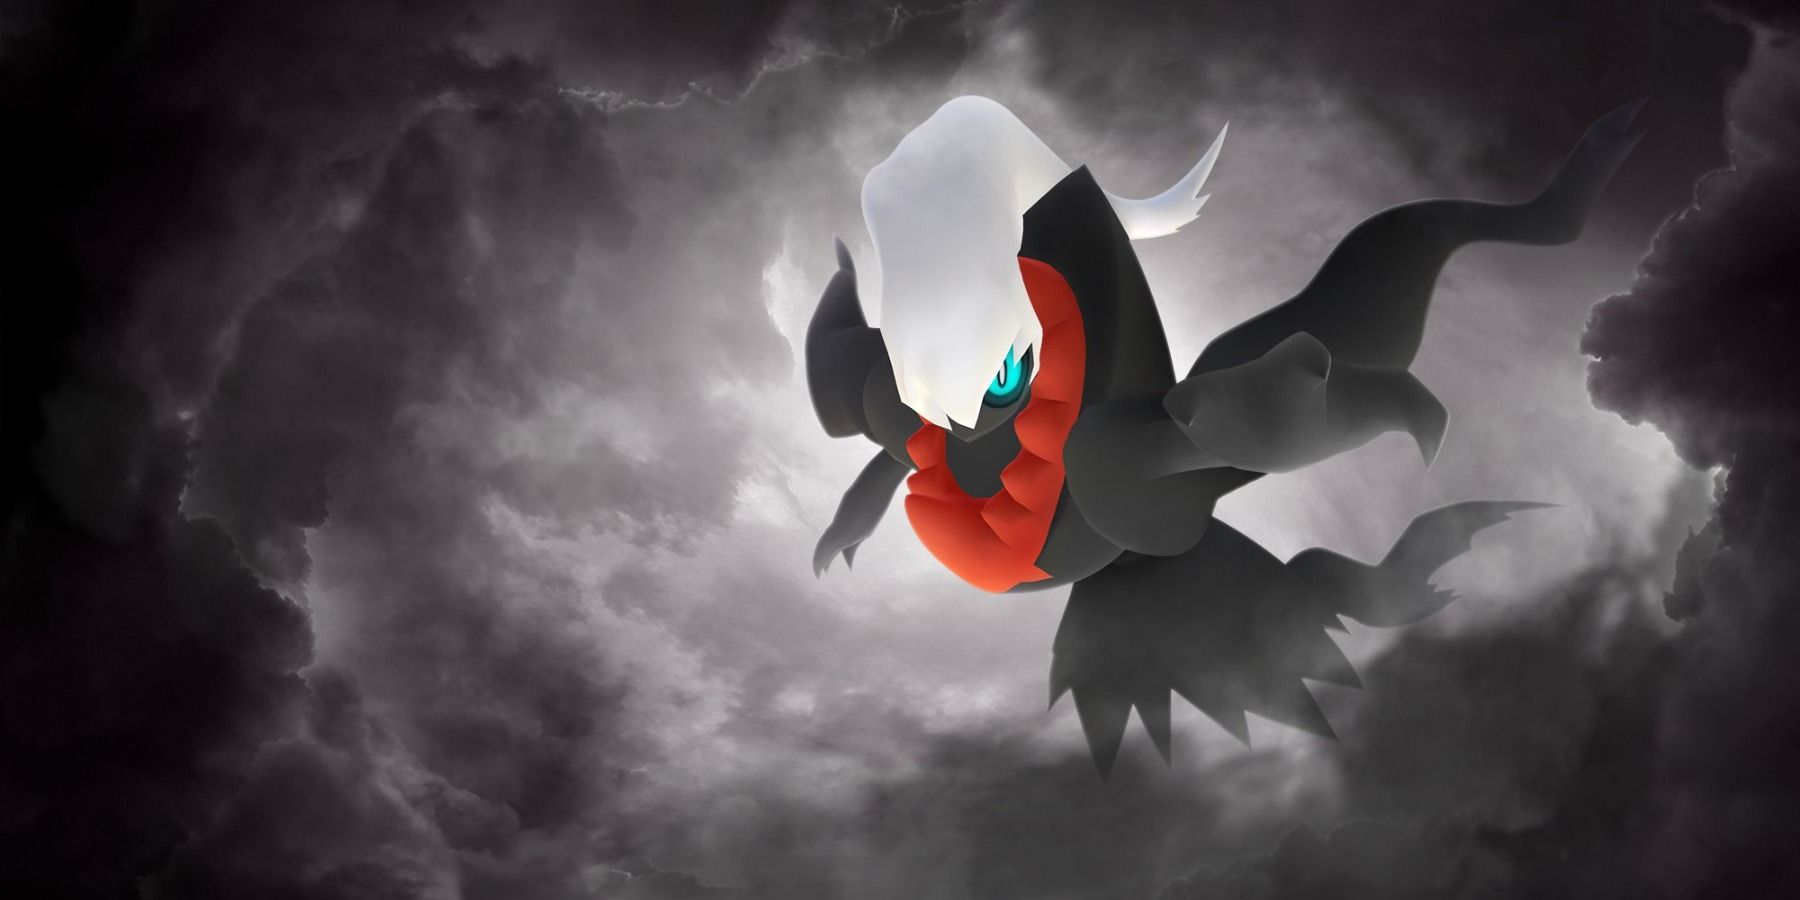 Promo image of Dark-type Pokemon Darkrai among stormy clouds for Pokémon GO